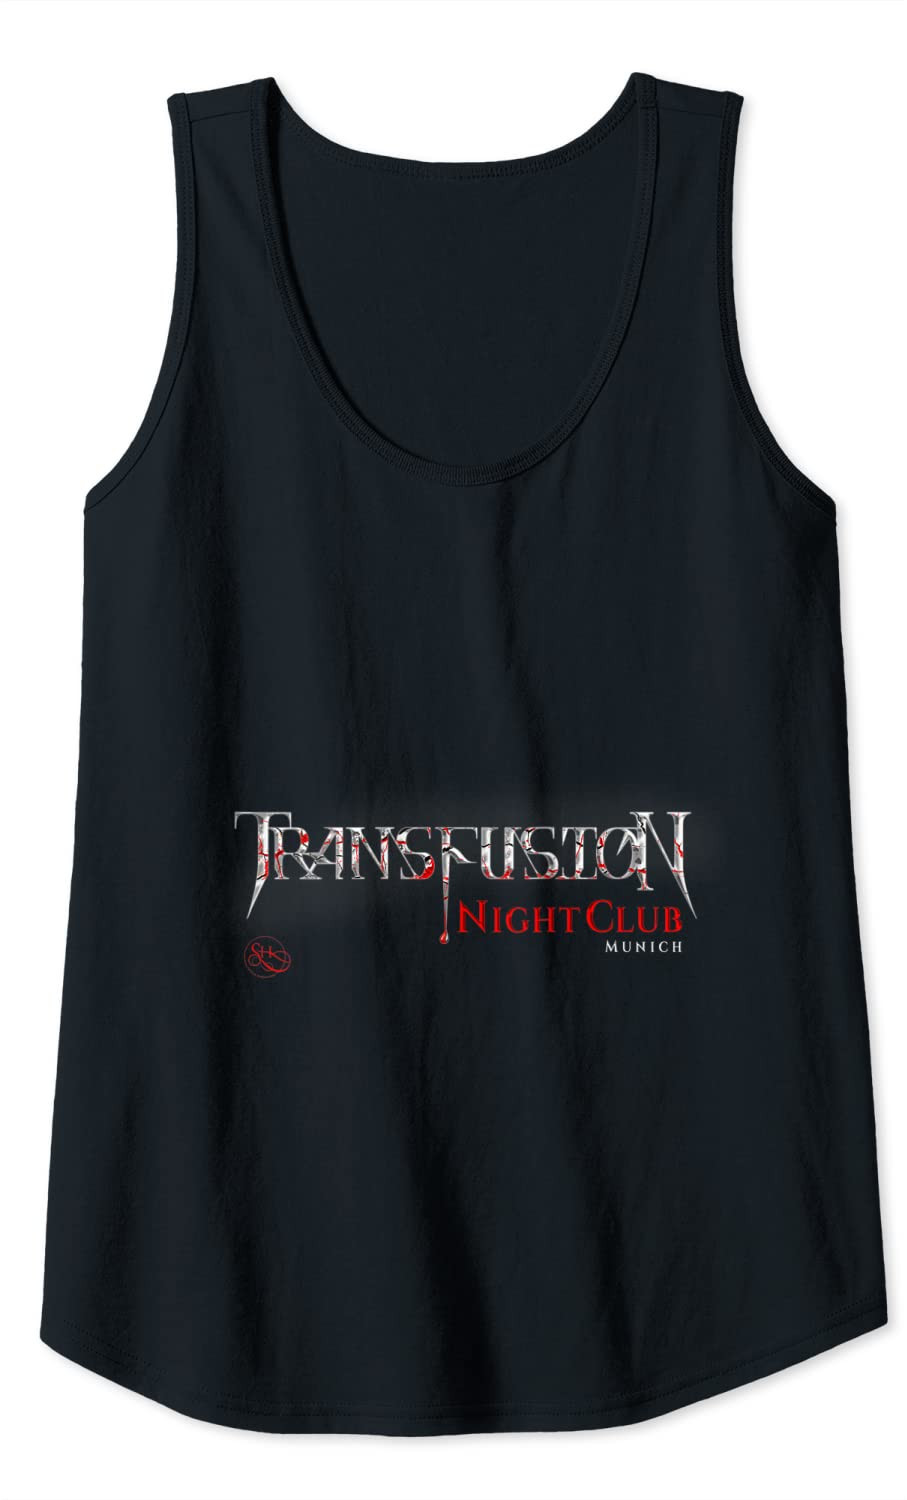 Transfusion Nightclub Tank Top